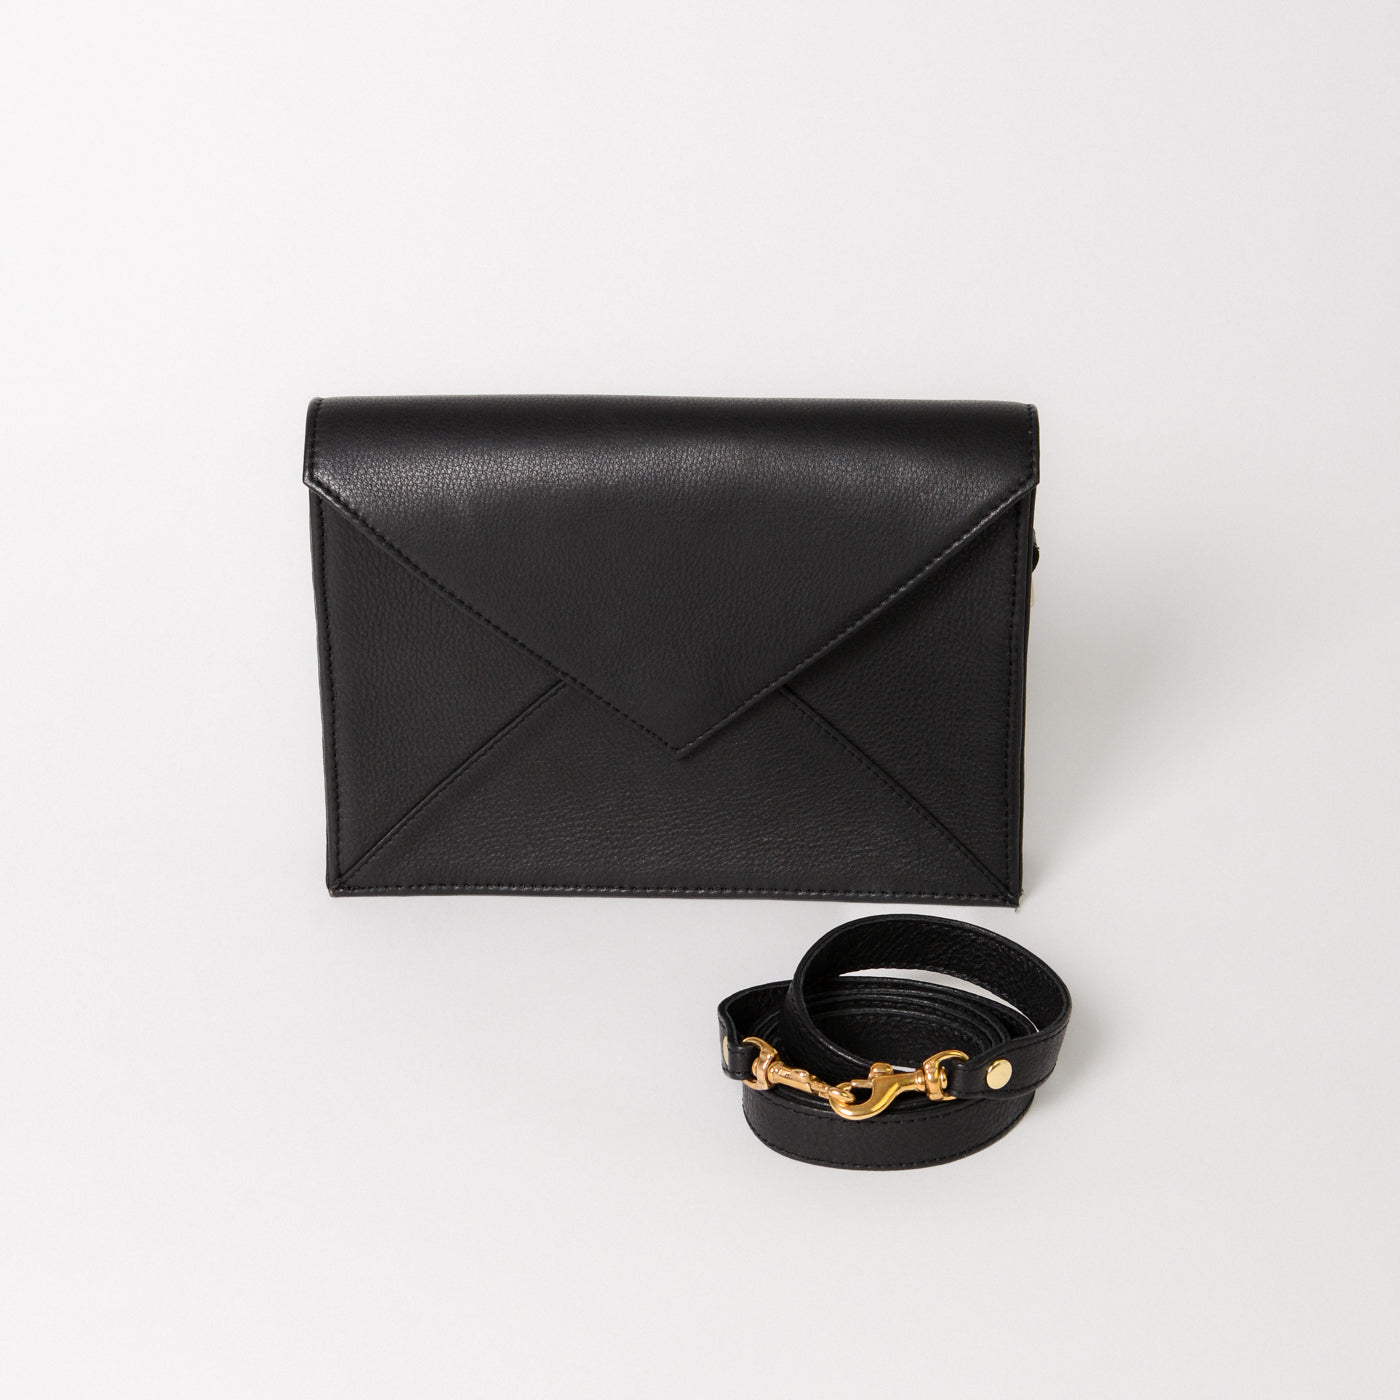 Bags | Women Envelope Clutch Handbag Medium Saffiano Leather Foldover Clutch  Purse | Poshmark